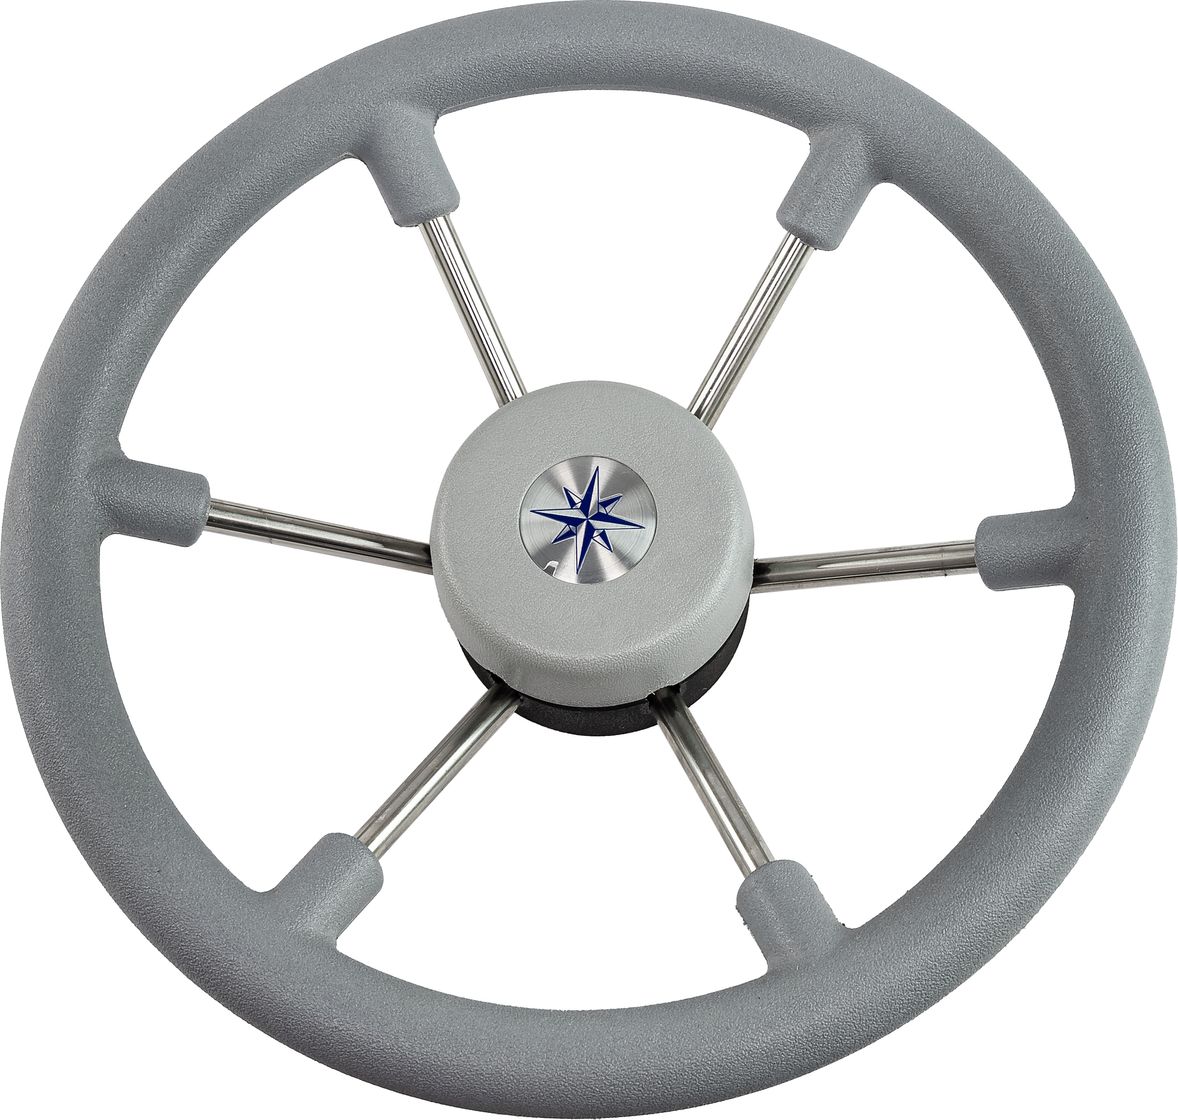 Рулевое колесо LEADER TANEGUM серый обод серебряные спицы д. 330 мм VN7330-03 рулевое колесо leader plast обод серебряные спицы д 360 мм vn8360 01